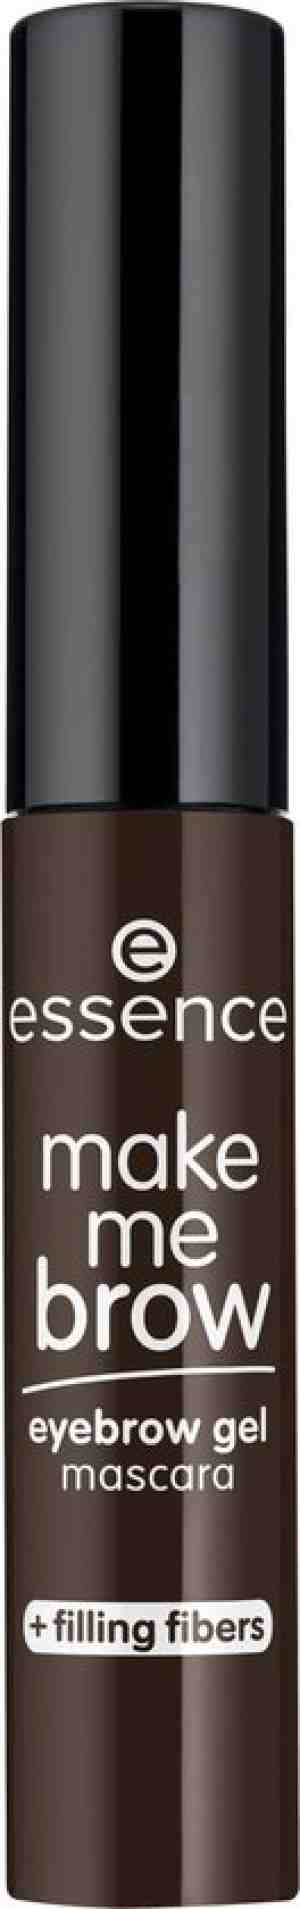 Foto: Essence cosmetics make me brow mscara gel para cejas 06 ebony brows 38 g